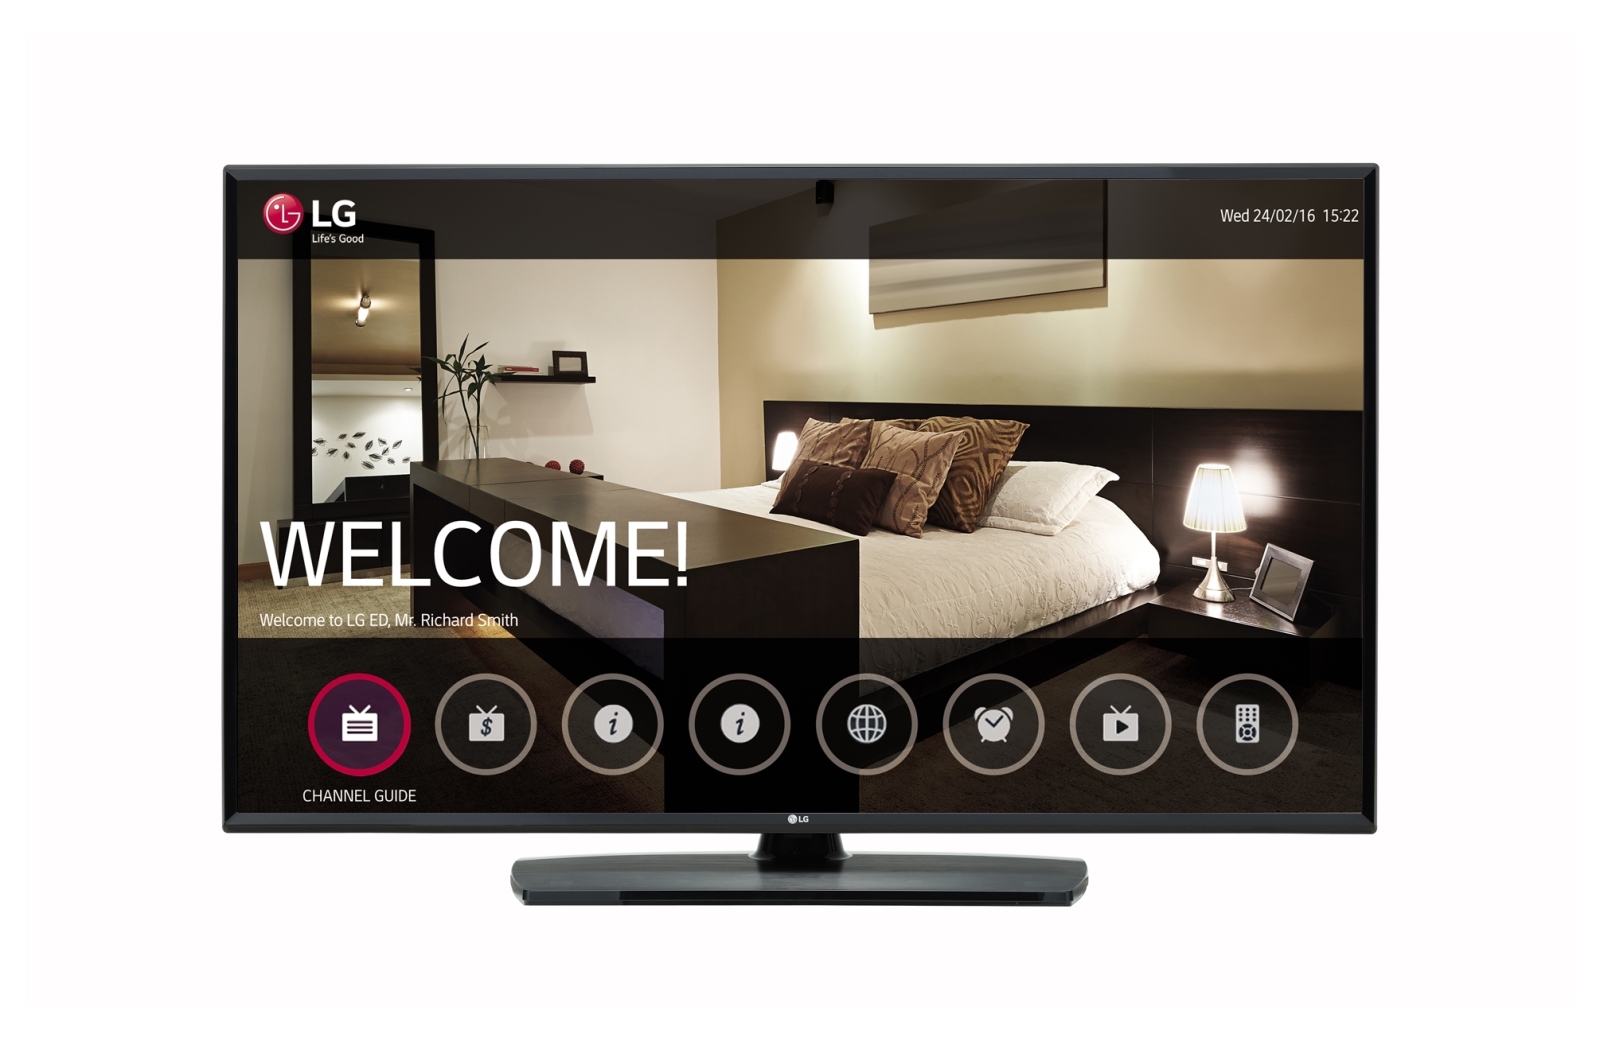 LG 49LU341H 49 Inch FHD LCD Hotel TV